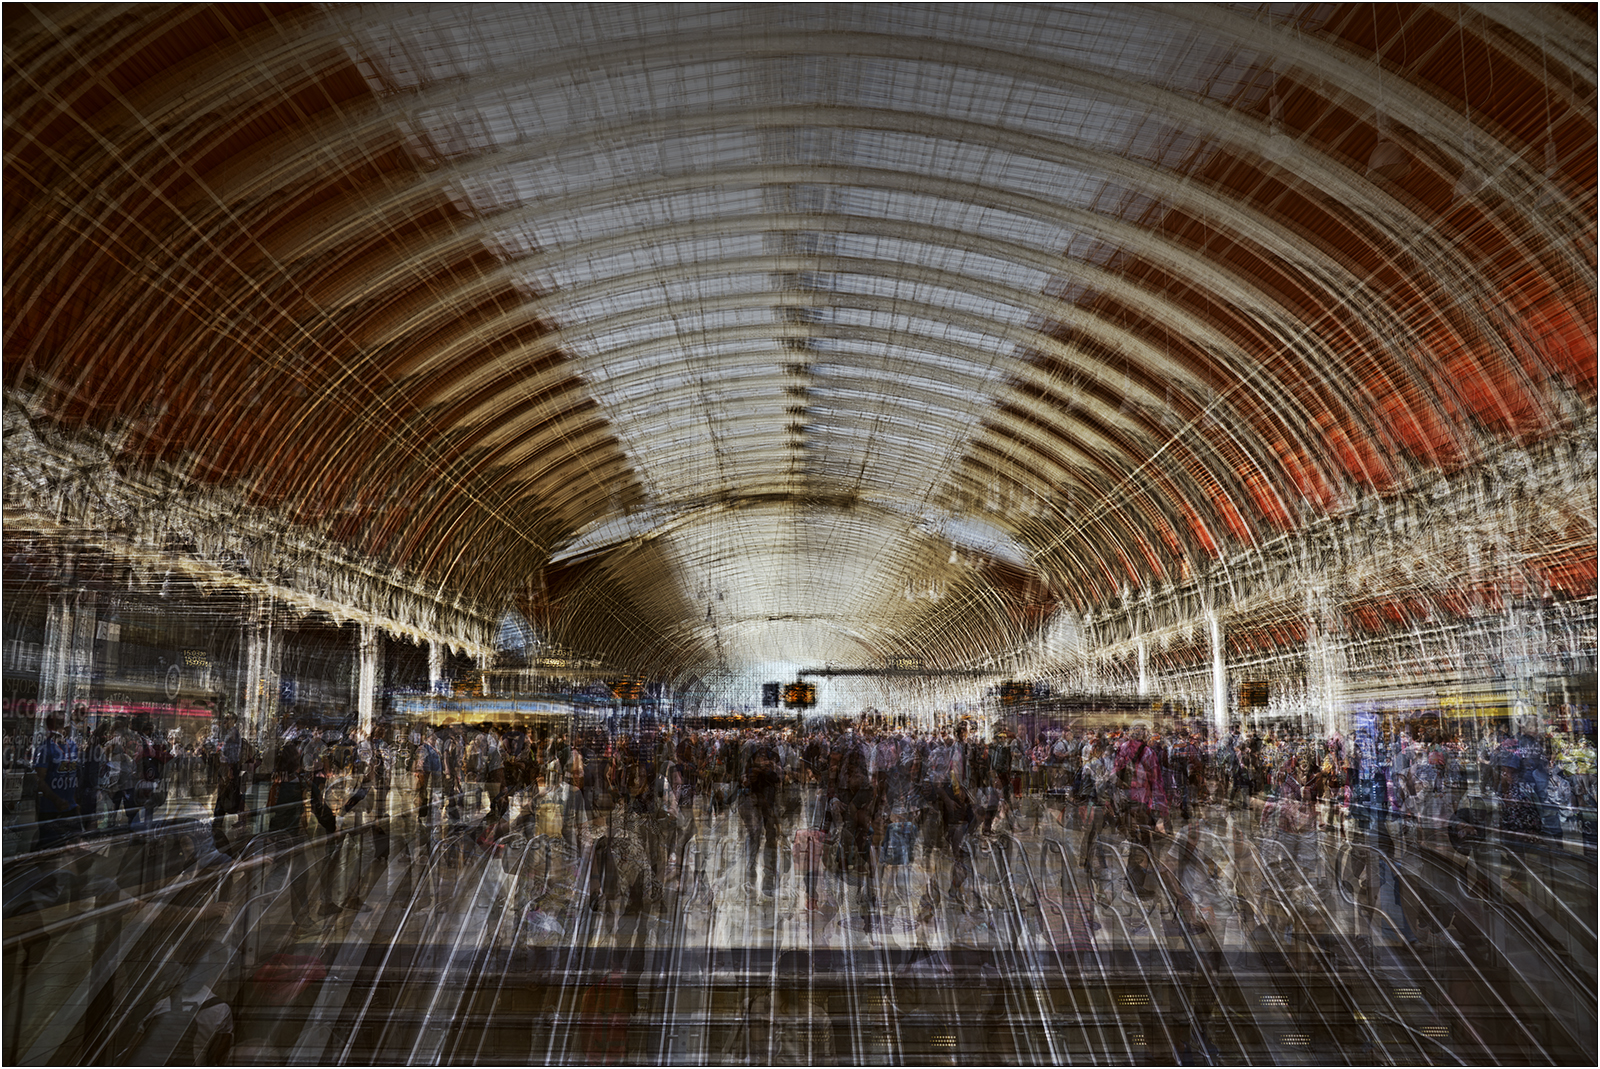 Impressionistic image of a London railway station